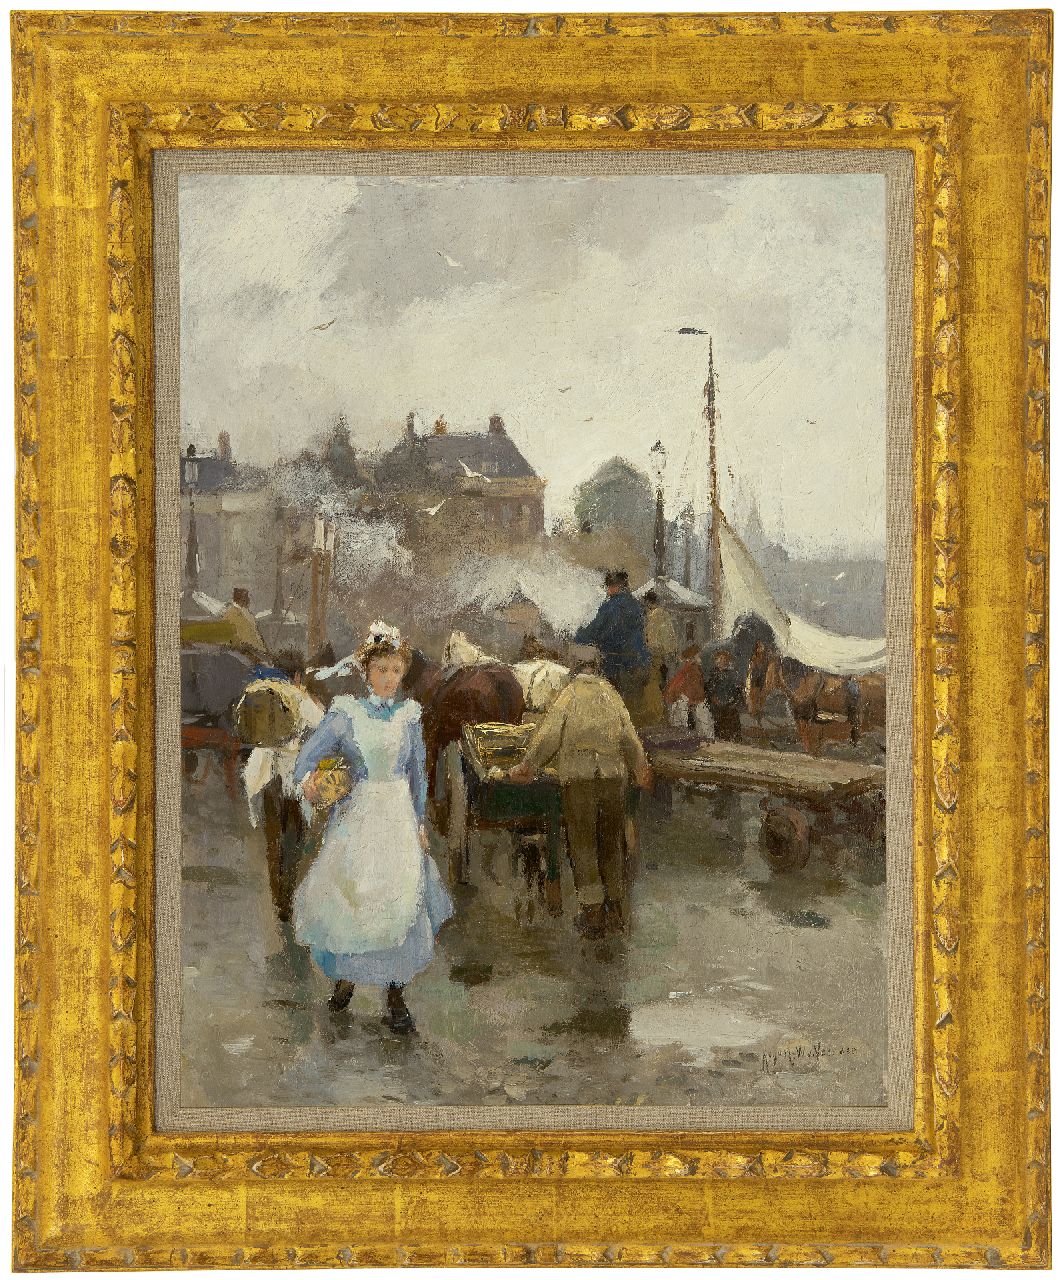 Voorden A.W. van | August Willem van Voorden, Maid-servant in Rotterdam, oil on canvas 47.0 x 35.9 cm, signed l.r.